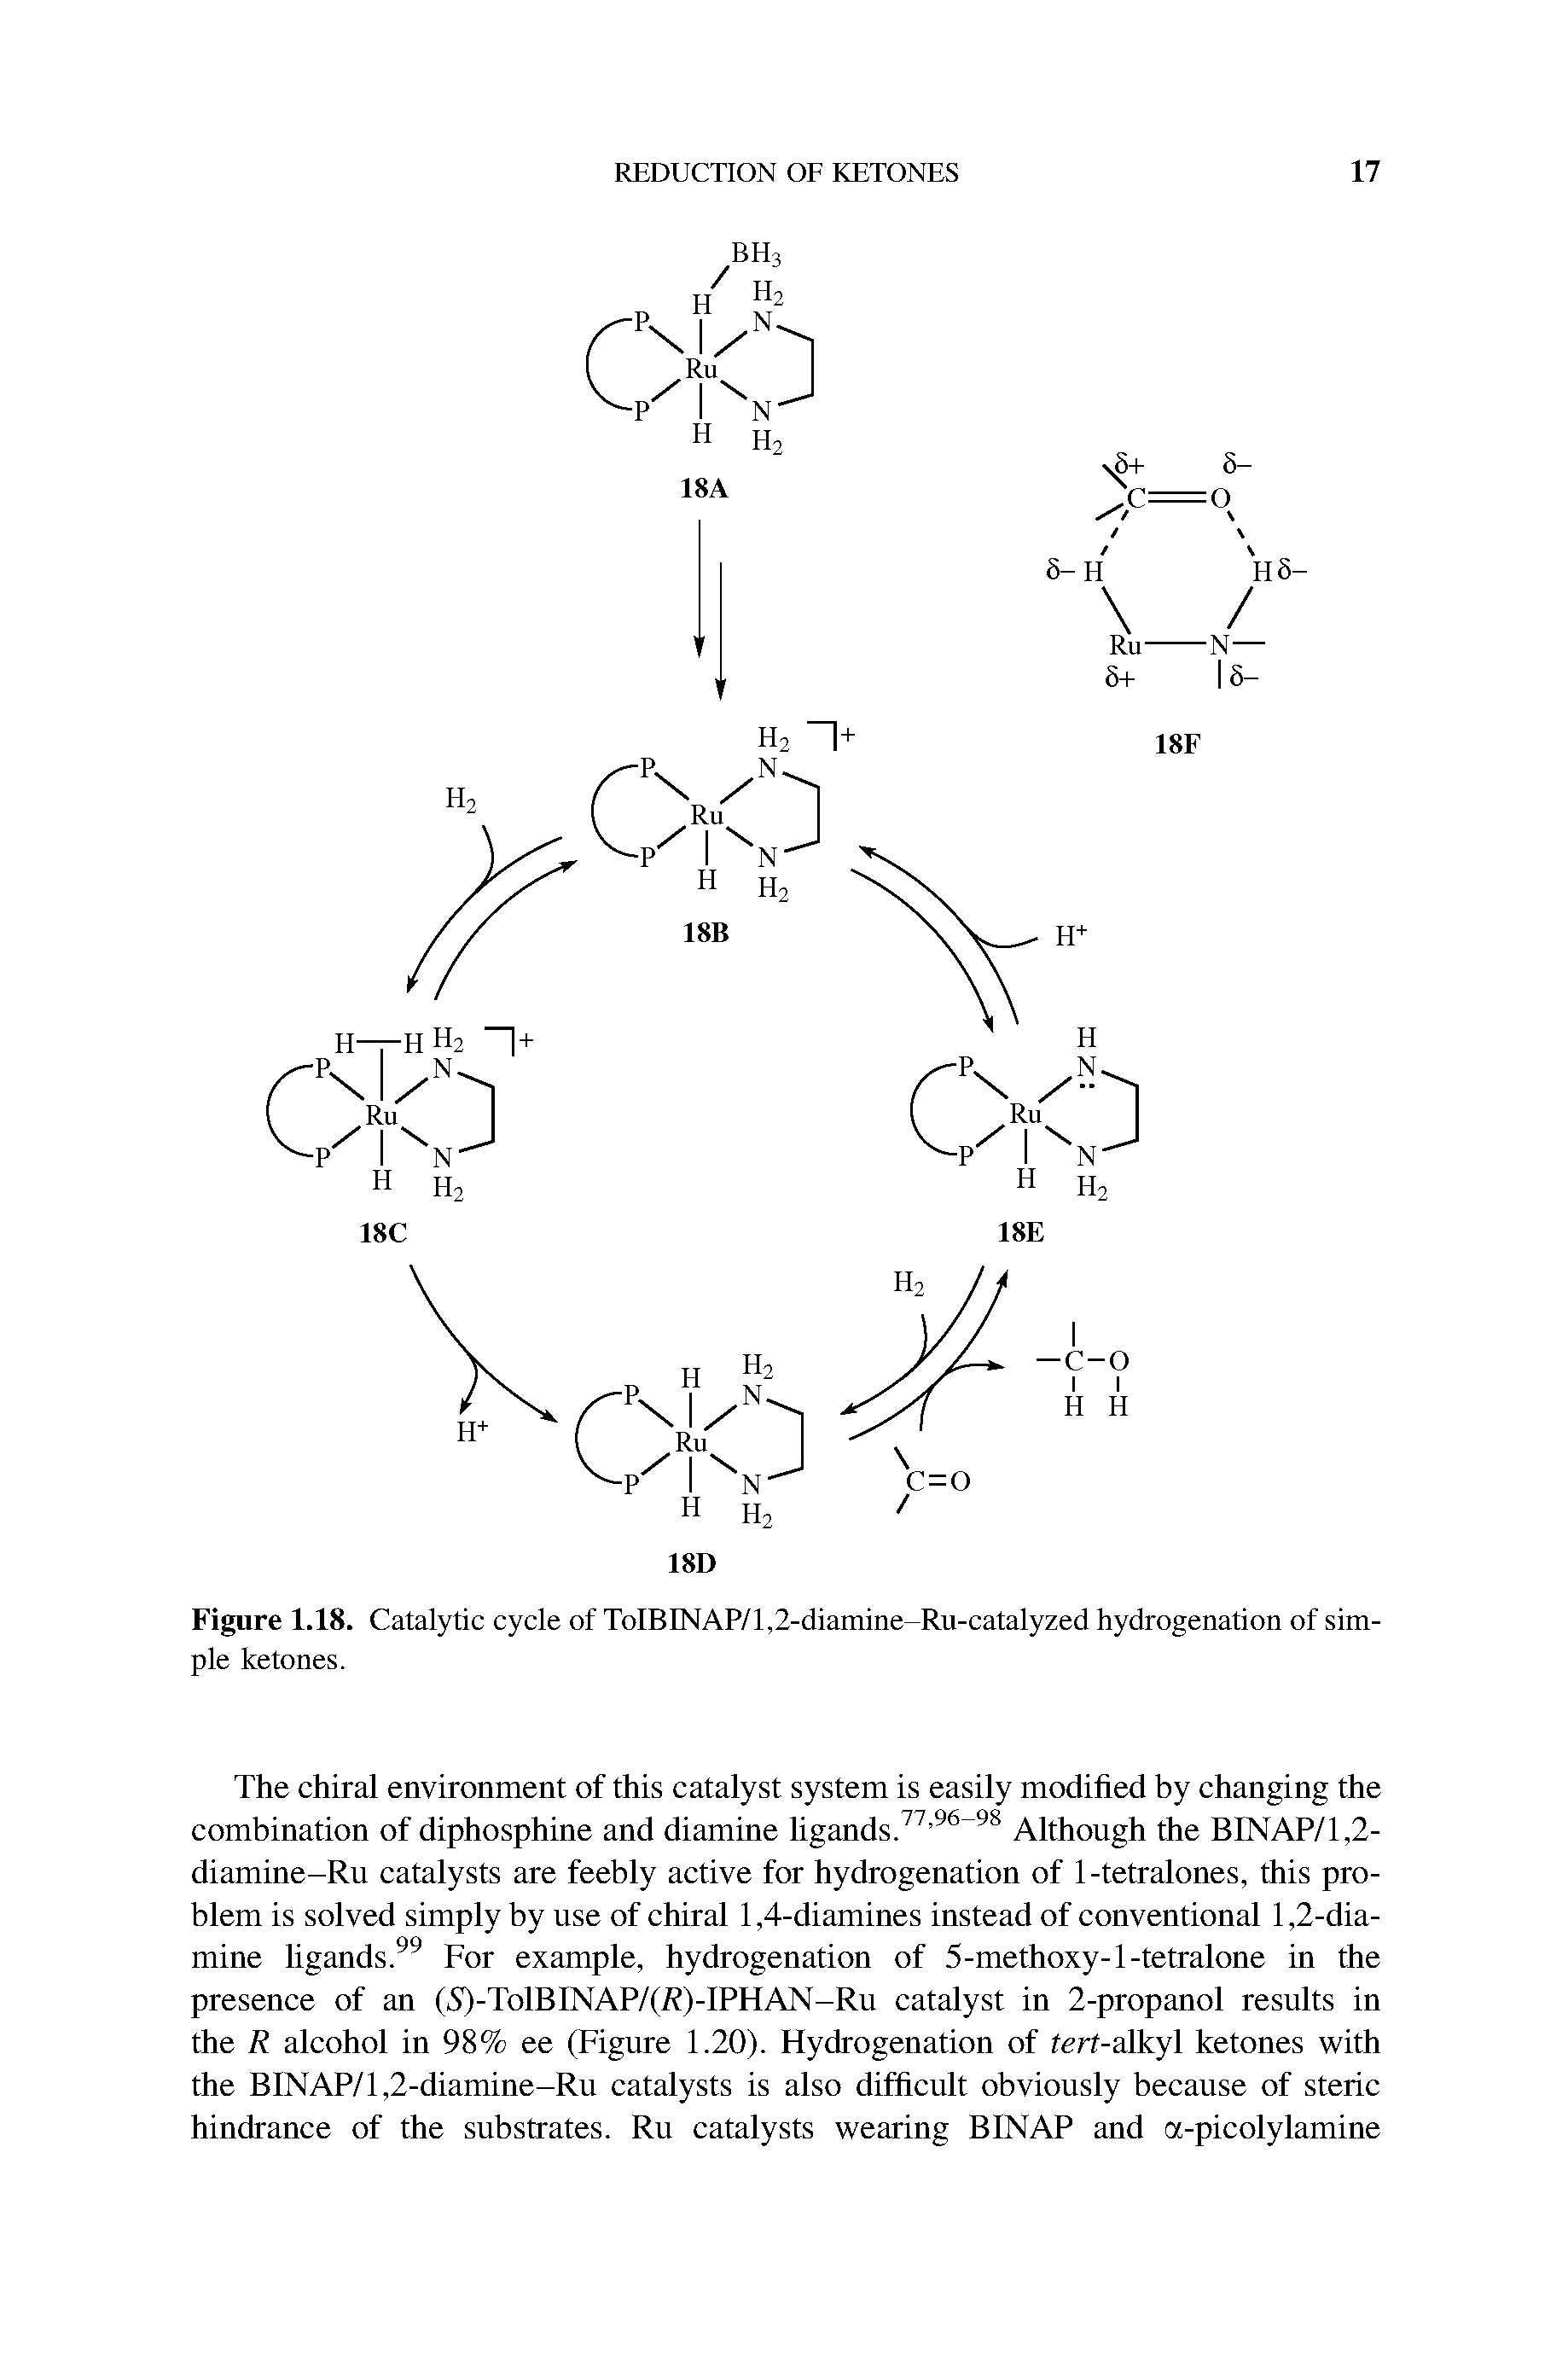 Figure 1.18. Catalytic cycle of ToIBINAP/l,2-diamine-Ru-catalyzed hydrogenation of simple ketones.